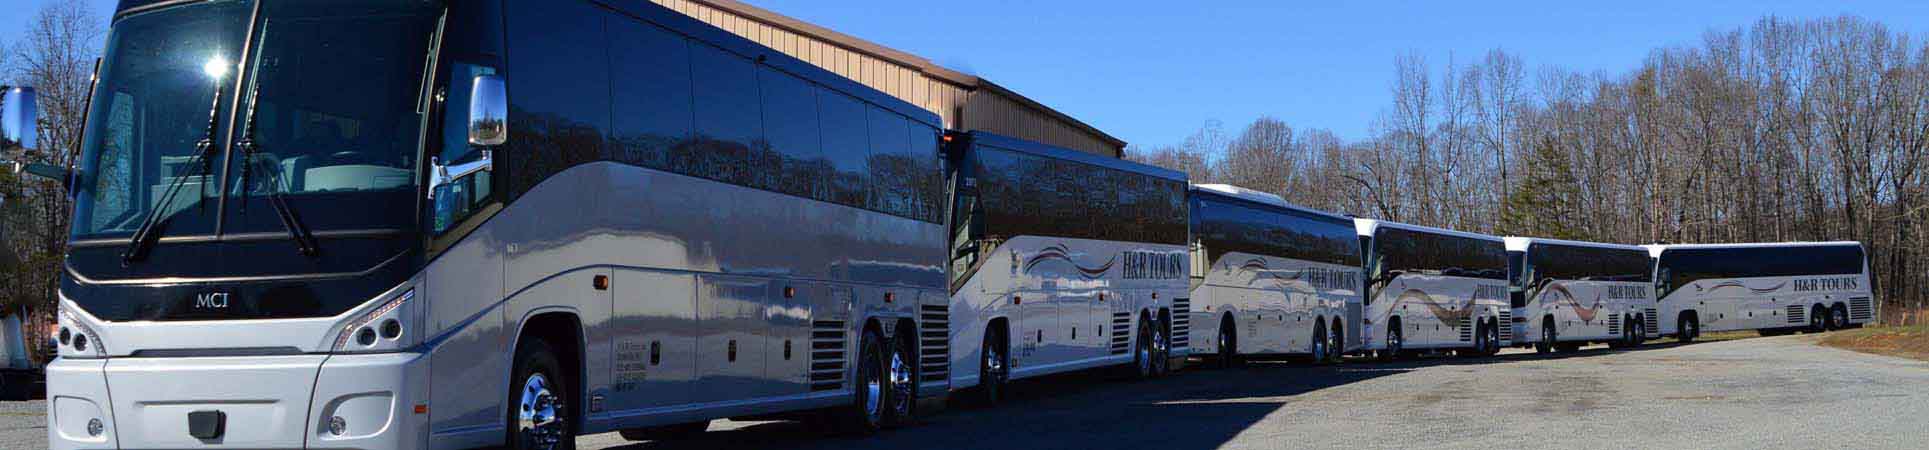 north carolina bus tour companies